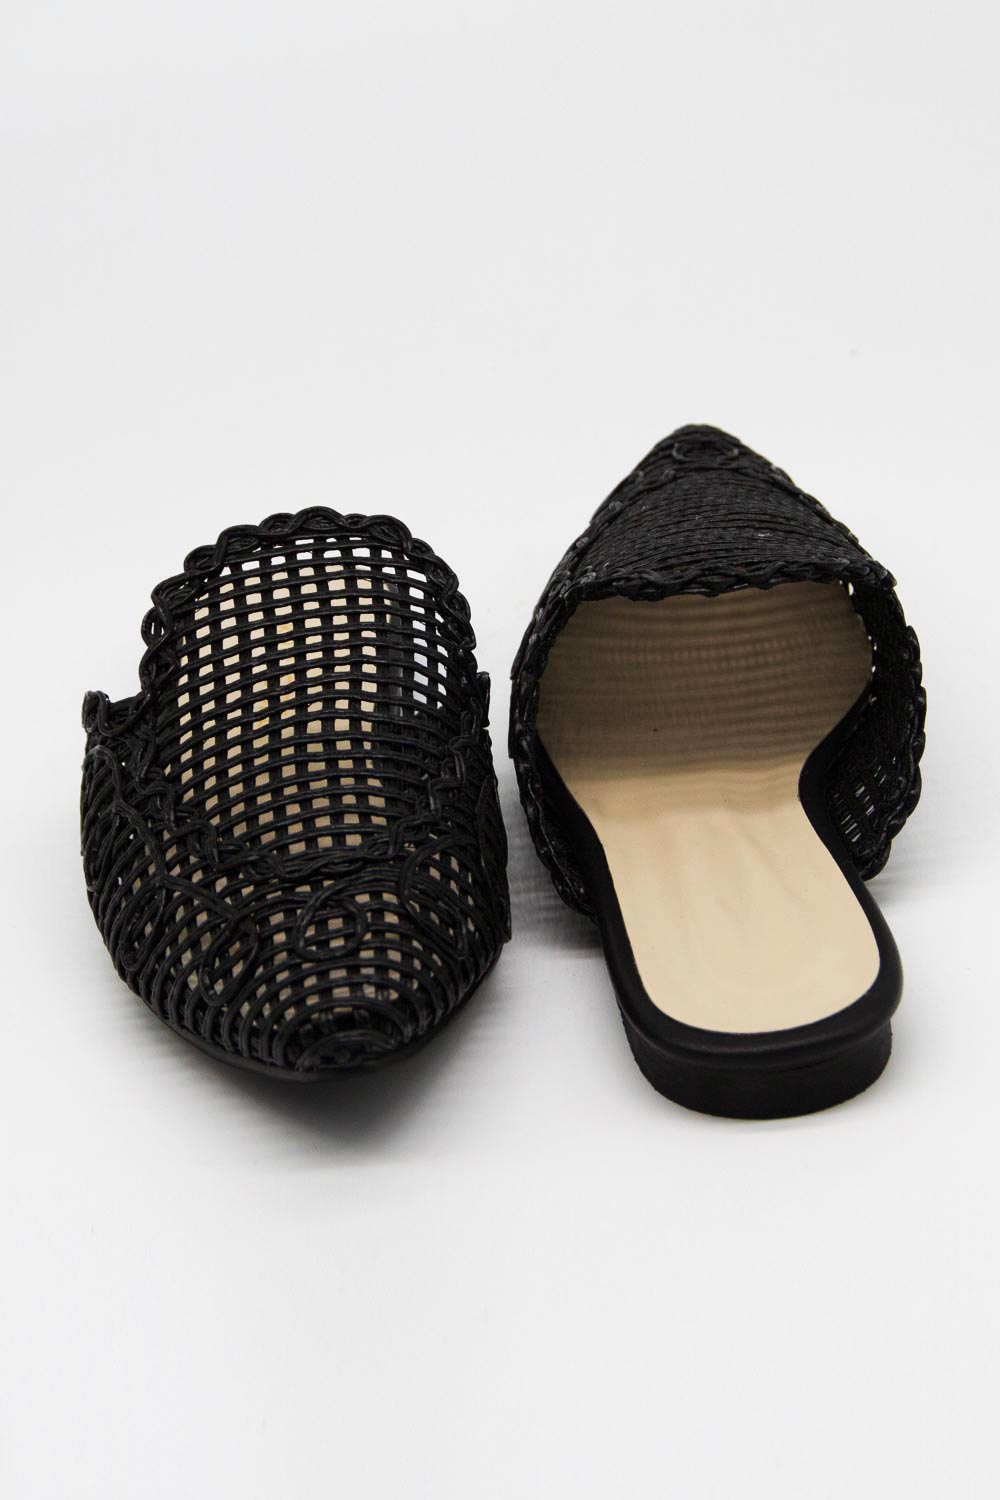 Knit Designed Mule Slippers (Black)